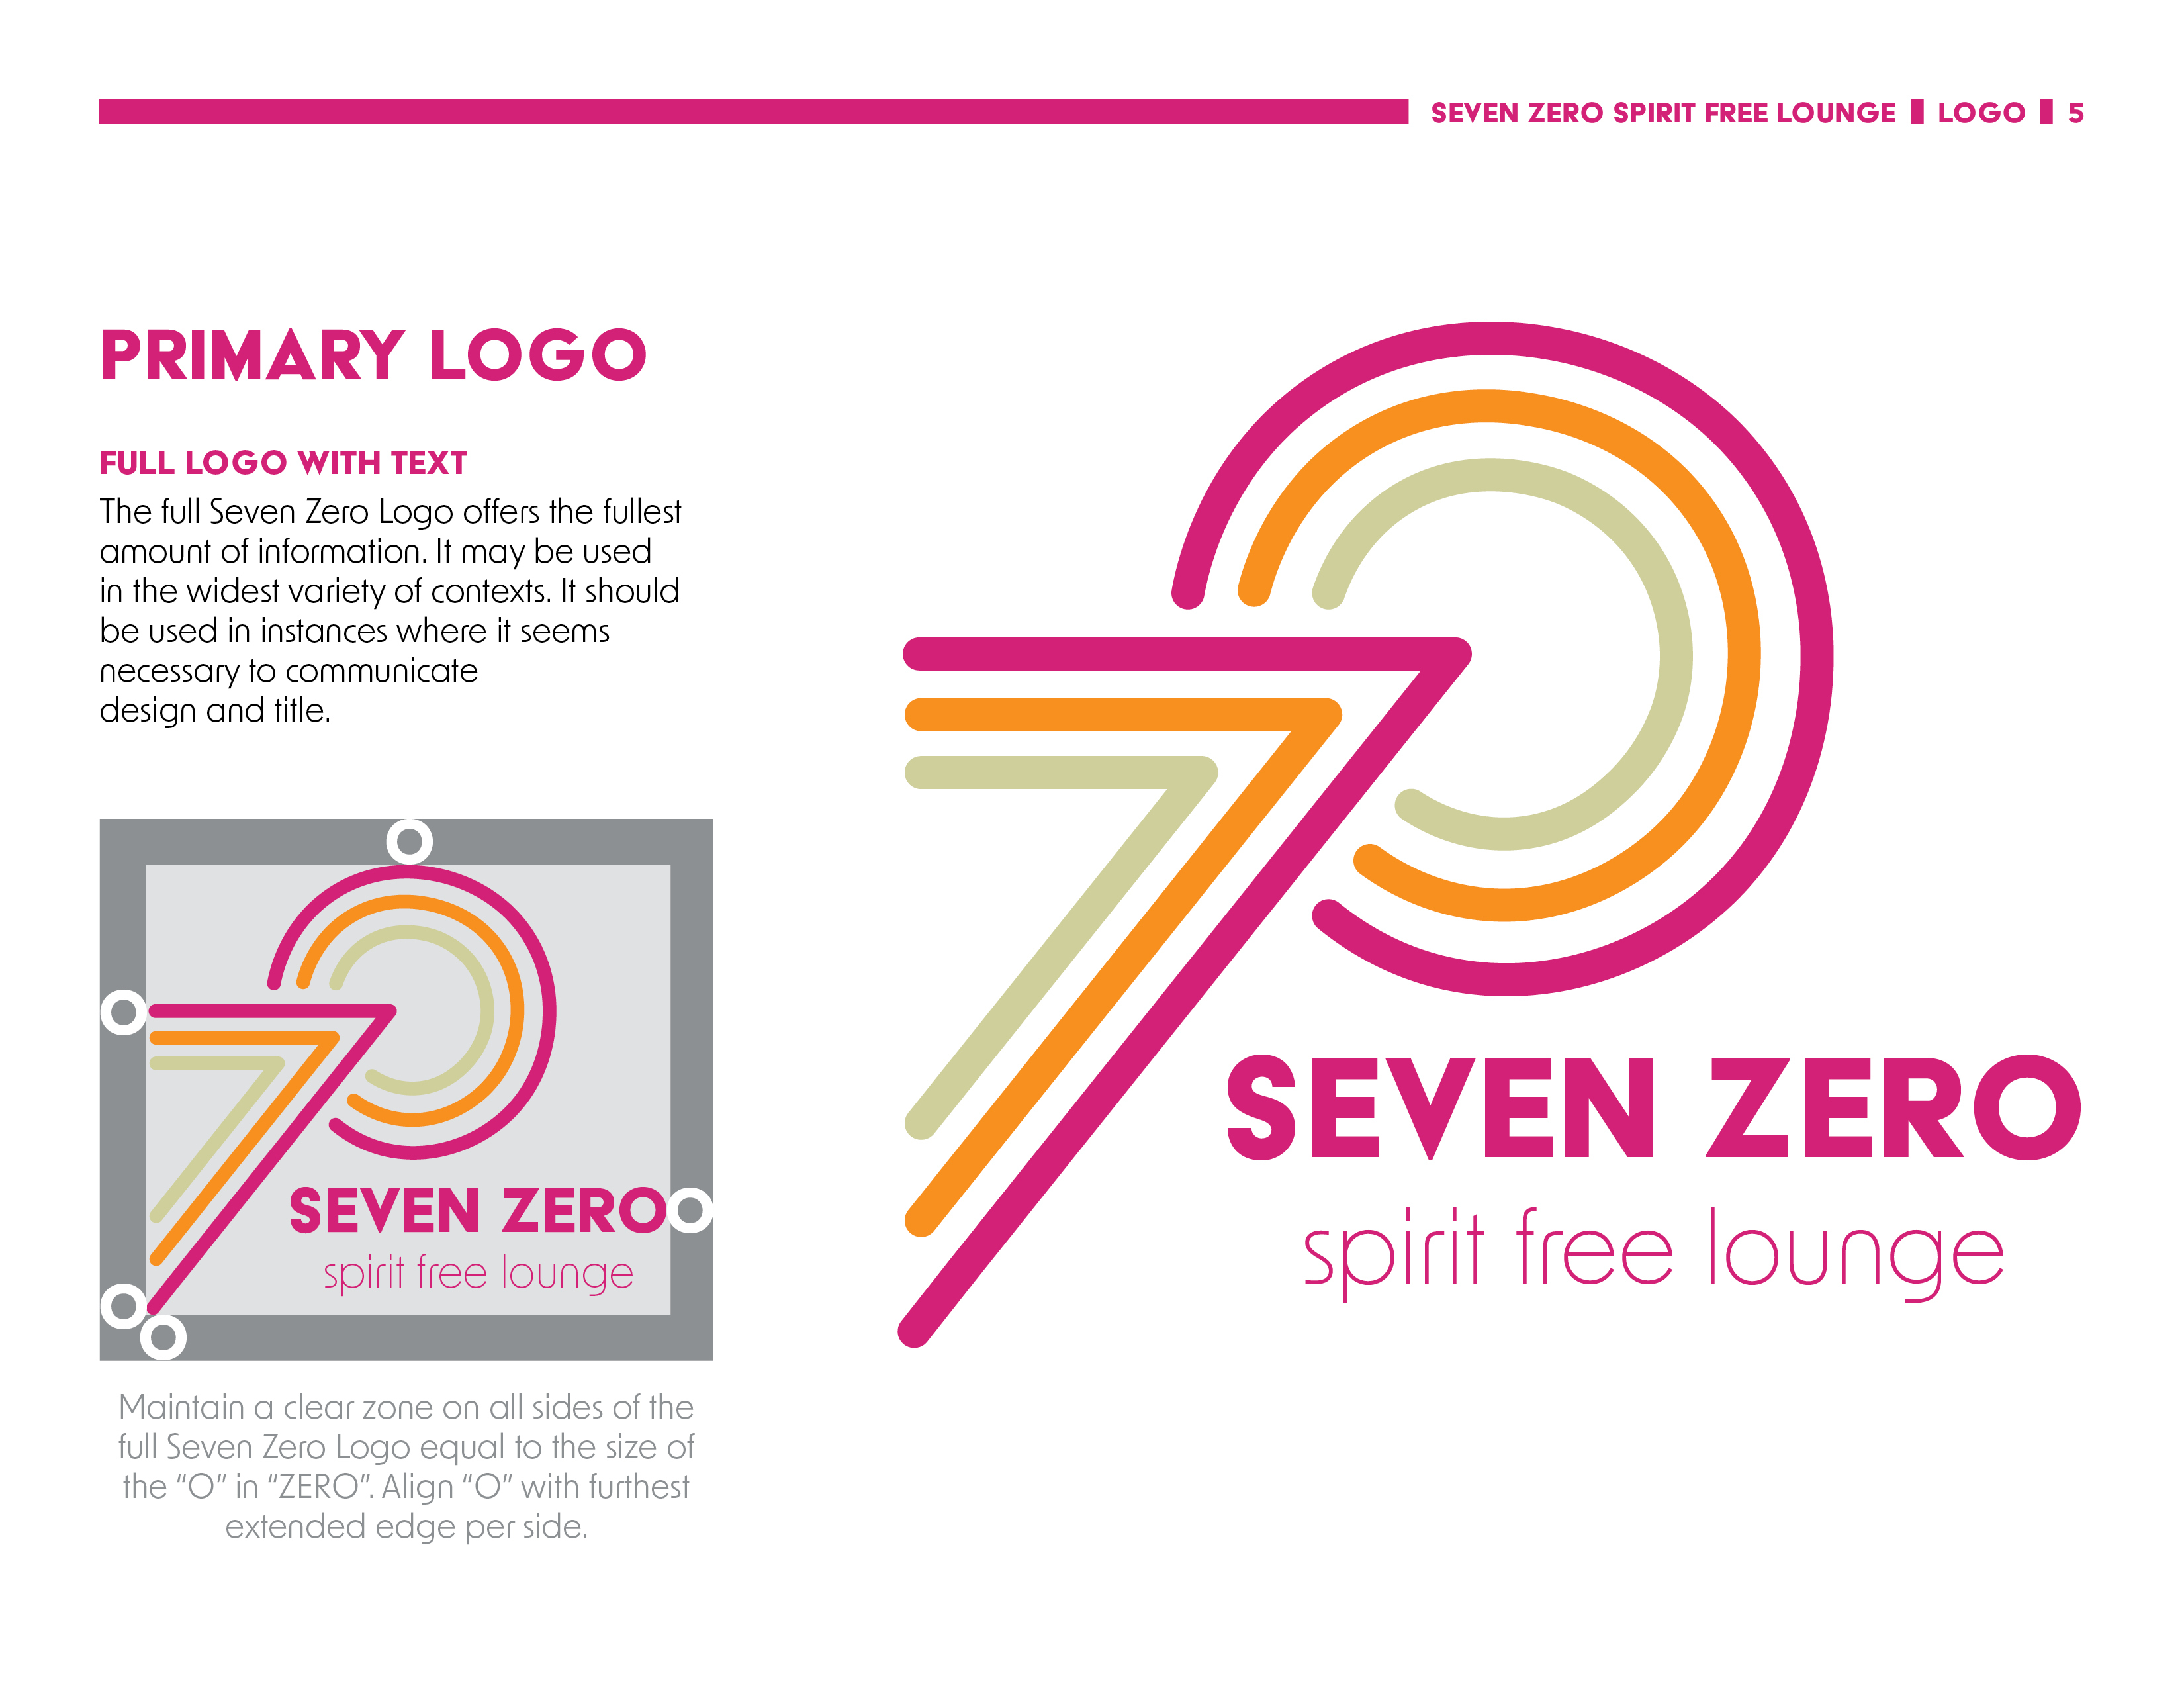 Seven Zero - Spirit Free Lounge